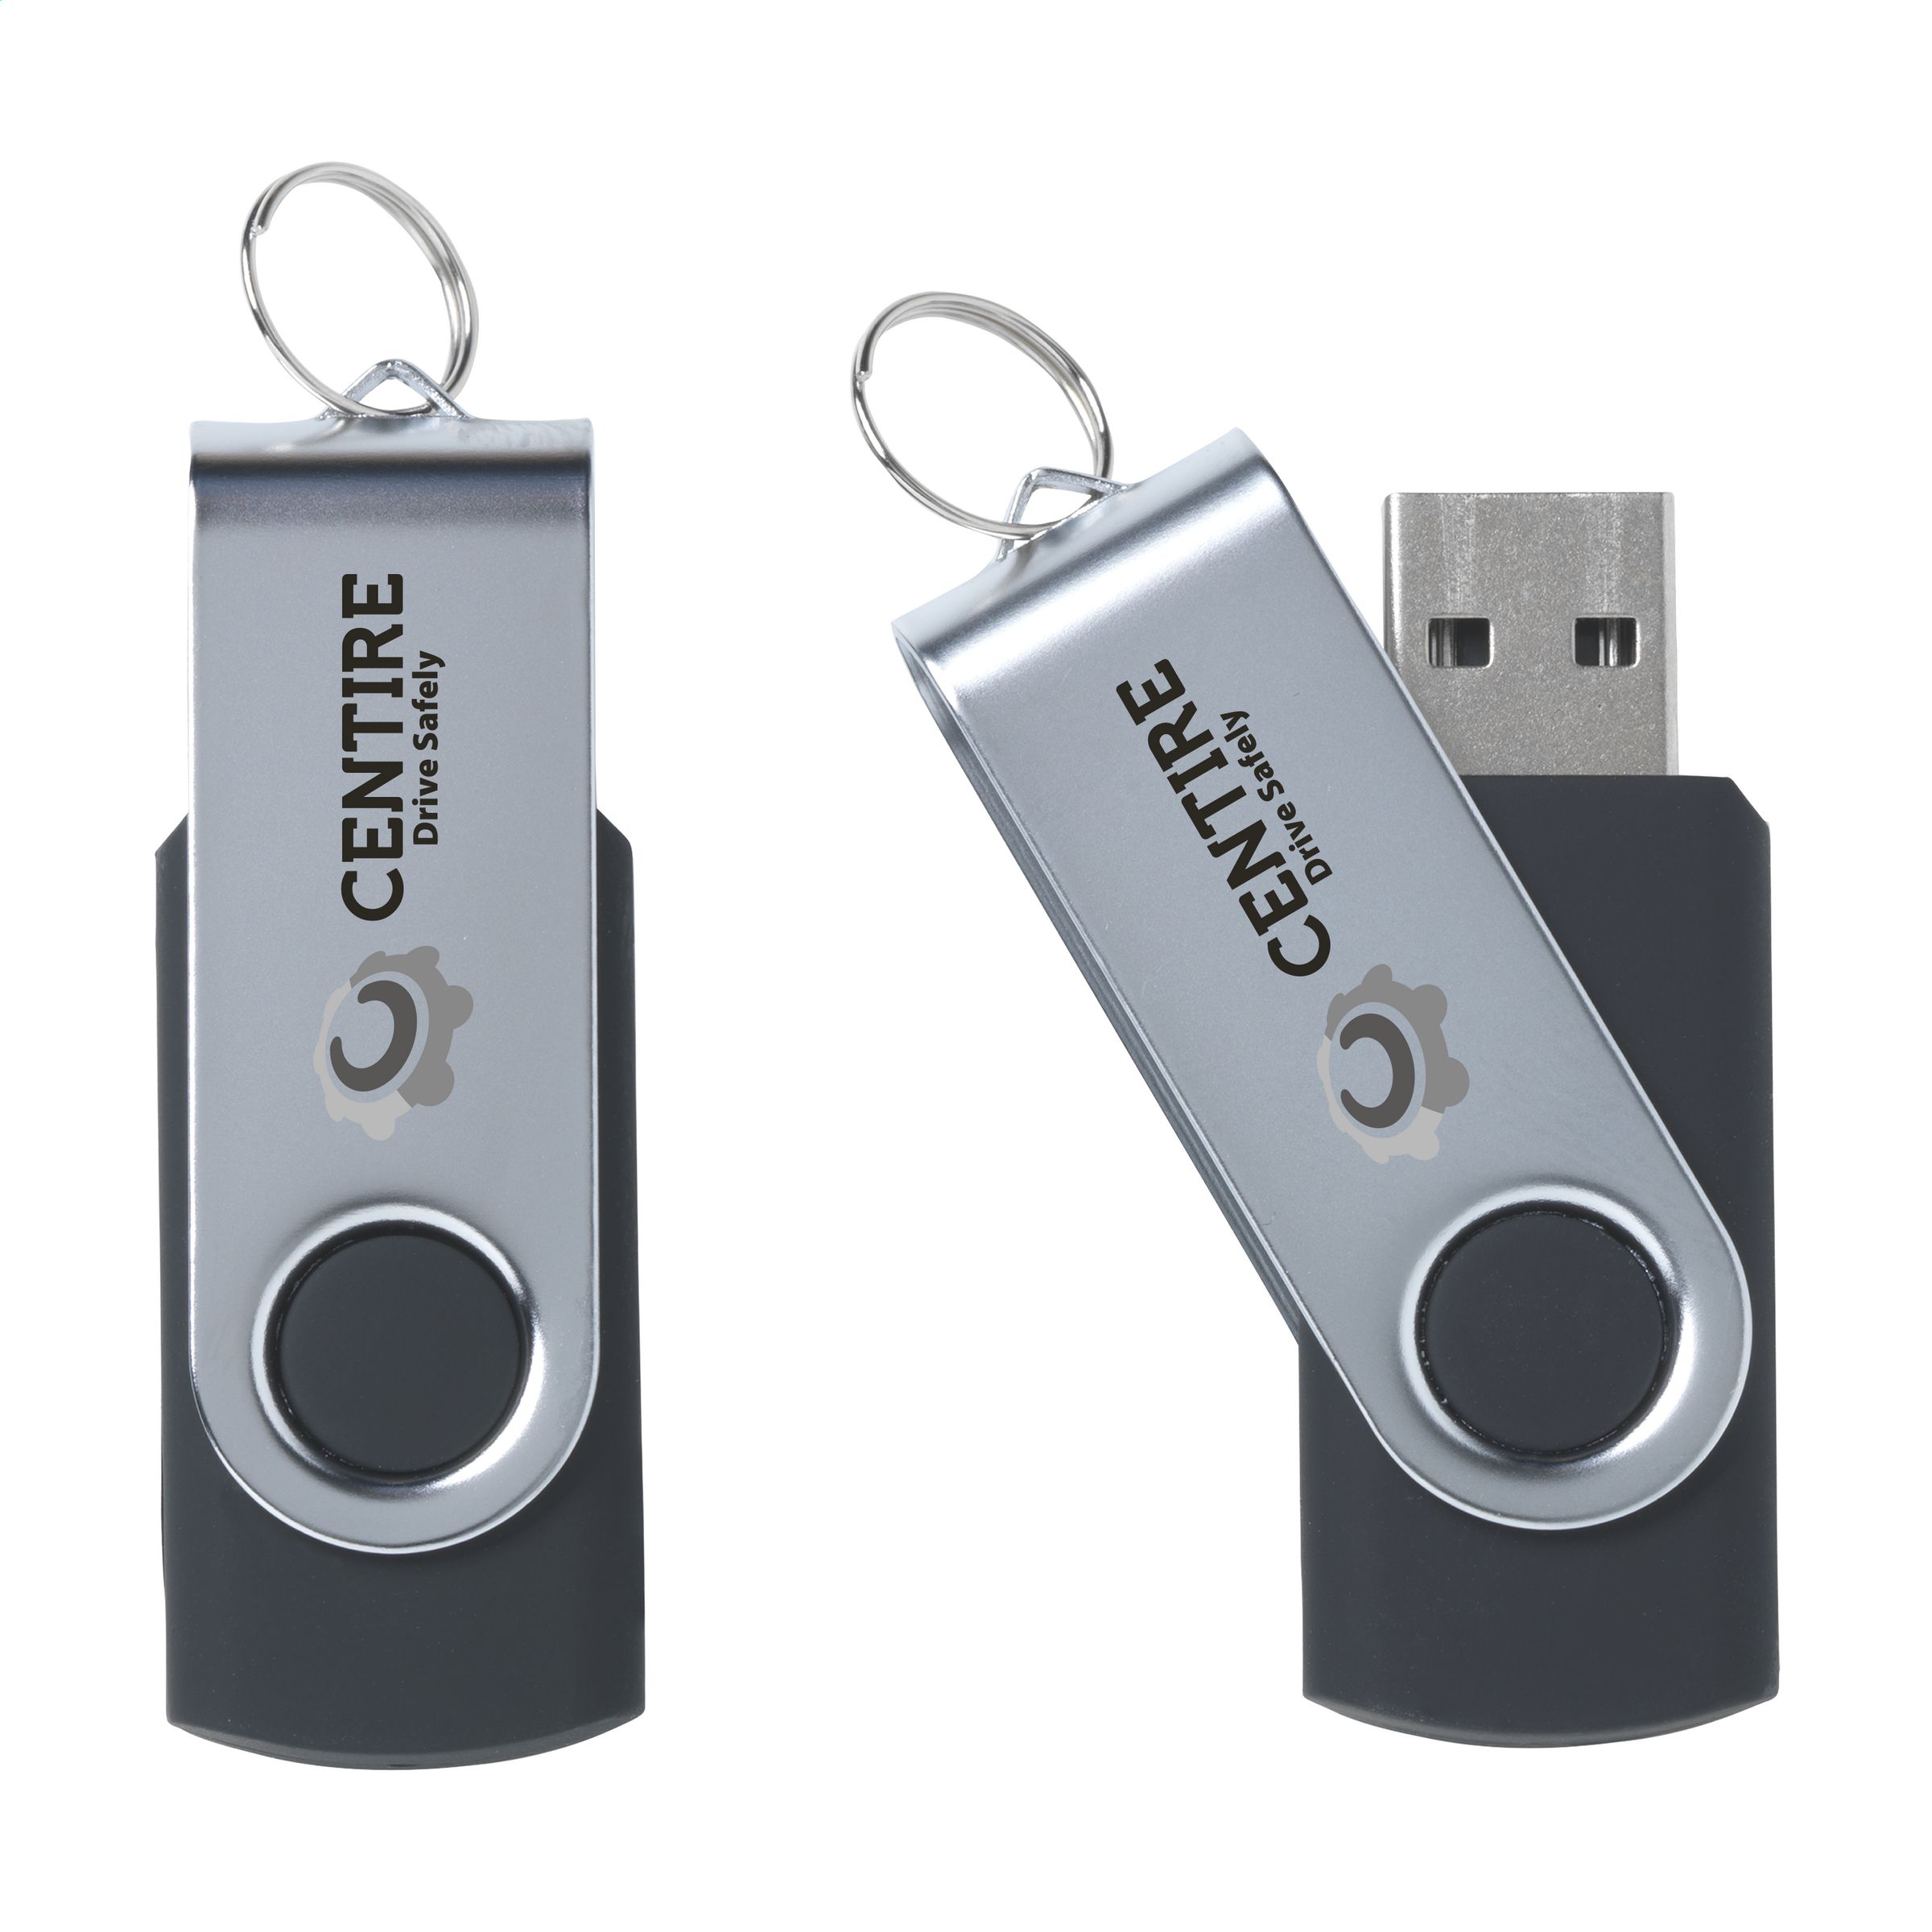 QuickStore USB - La Magdeleine